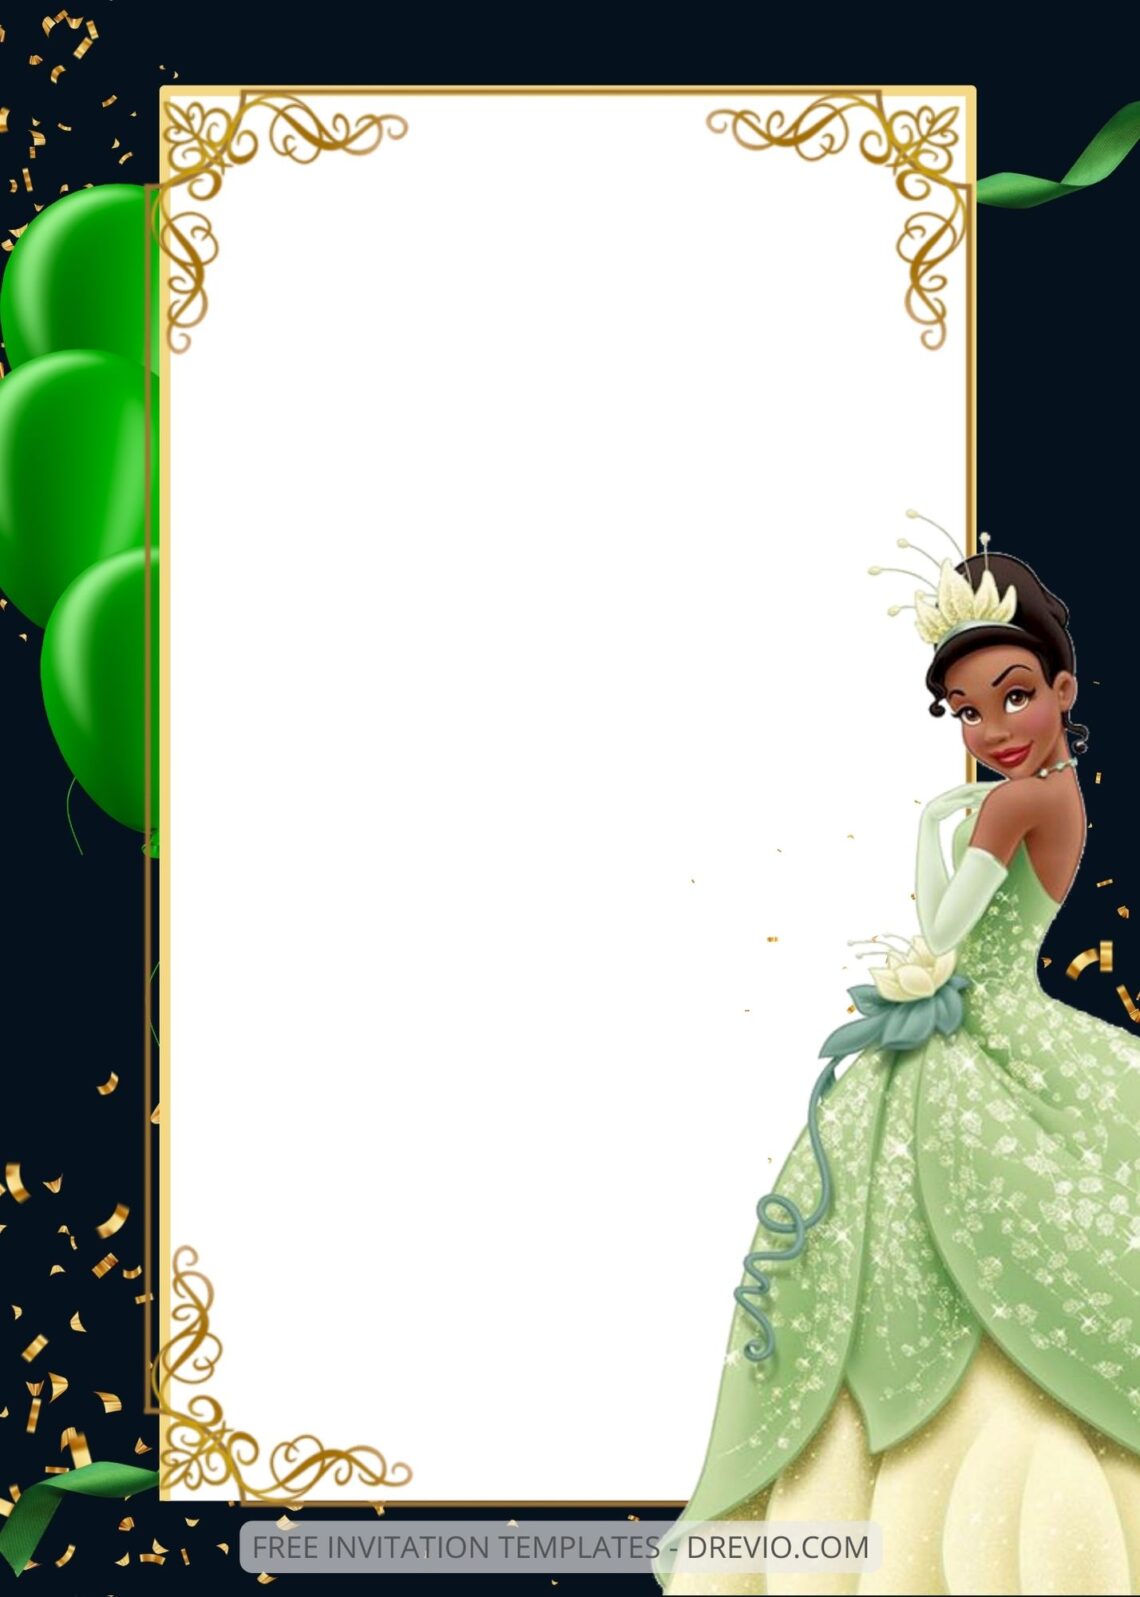 FREE EDITABLE - 9+ Princess Tiana Canva Birthday Invitation Templates Four